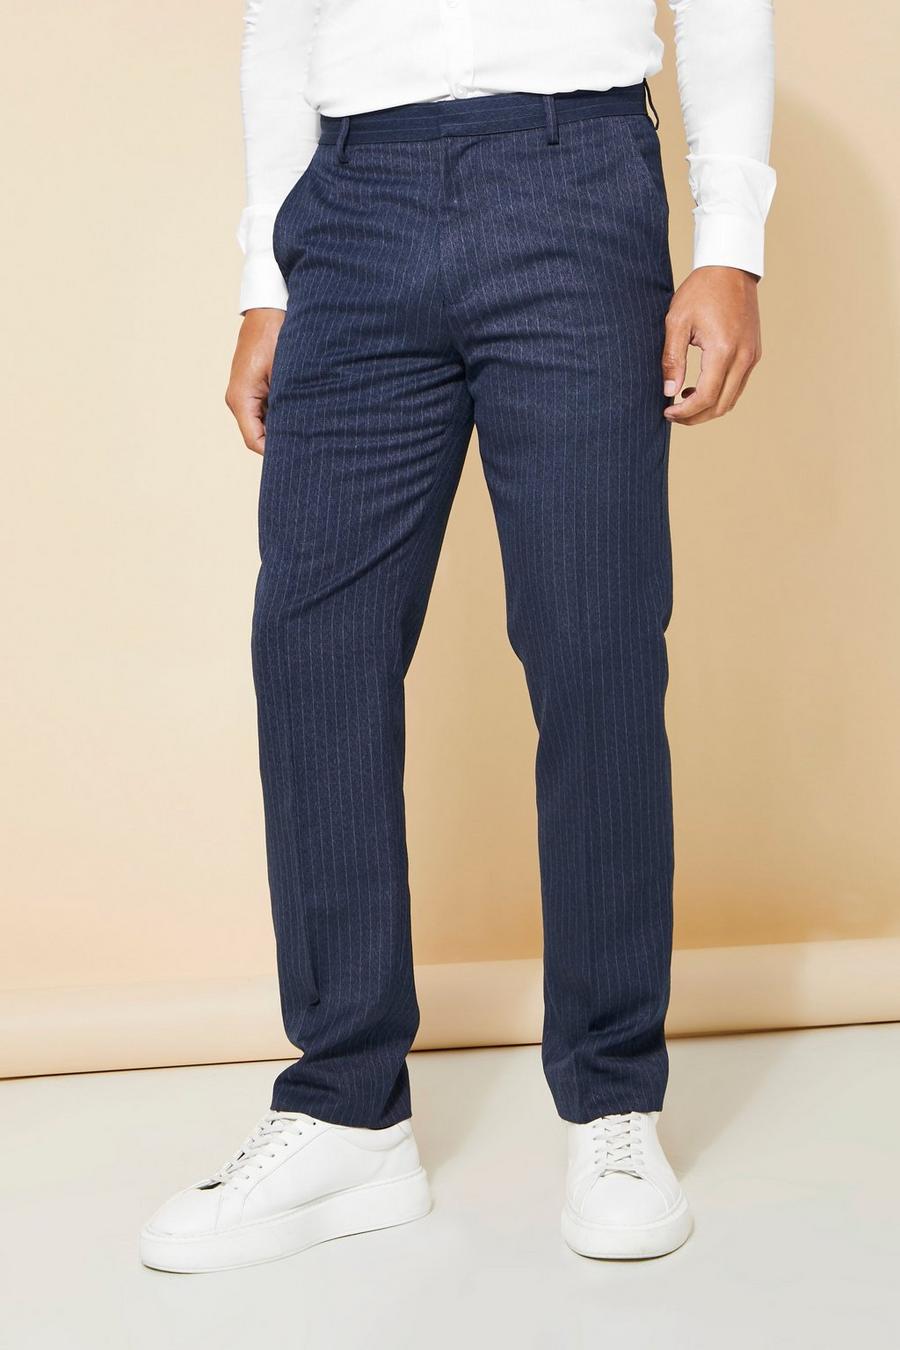 Pantaloni sartoriali Slim Fit a righe verticali, Navy azul marino